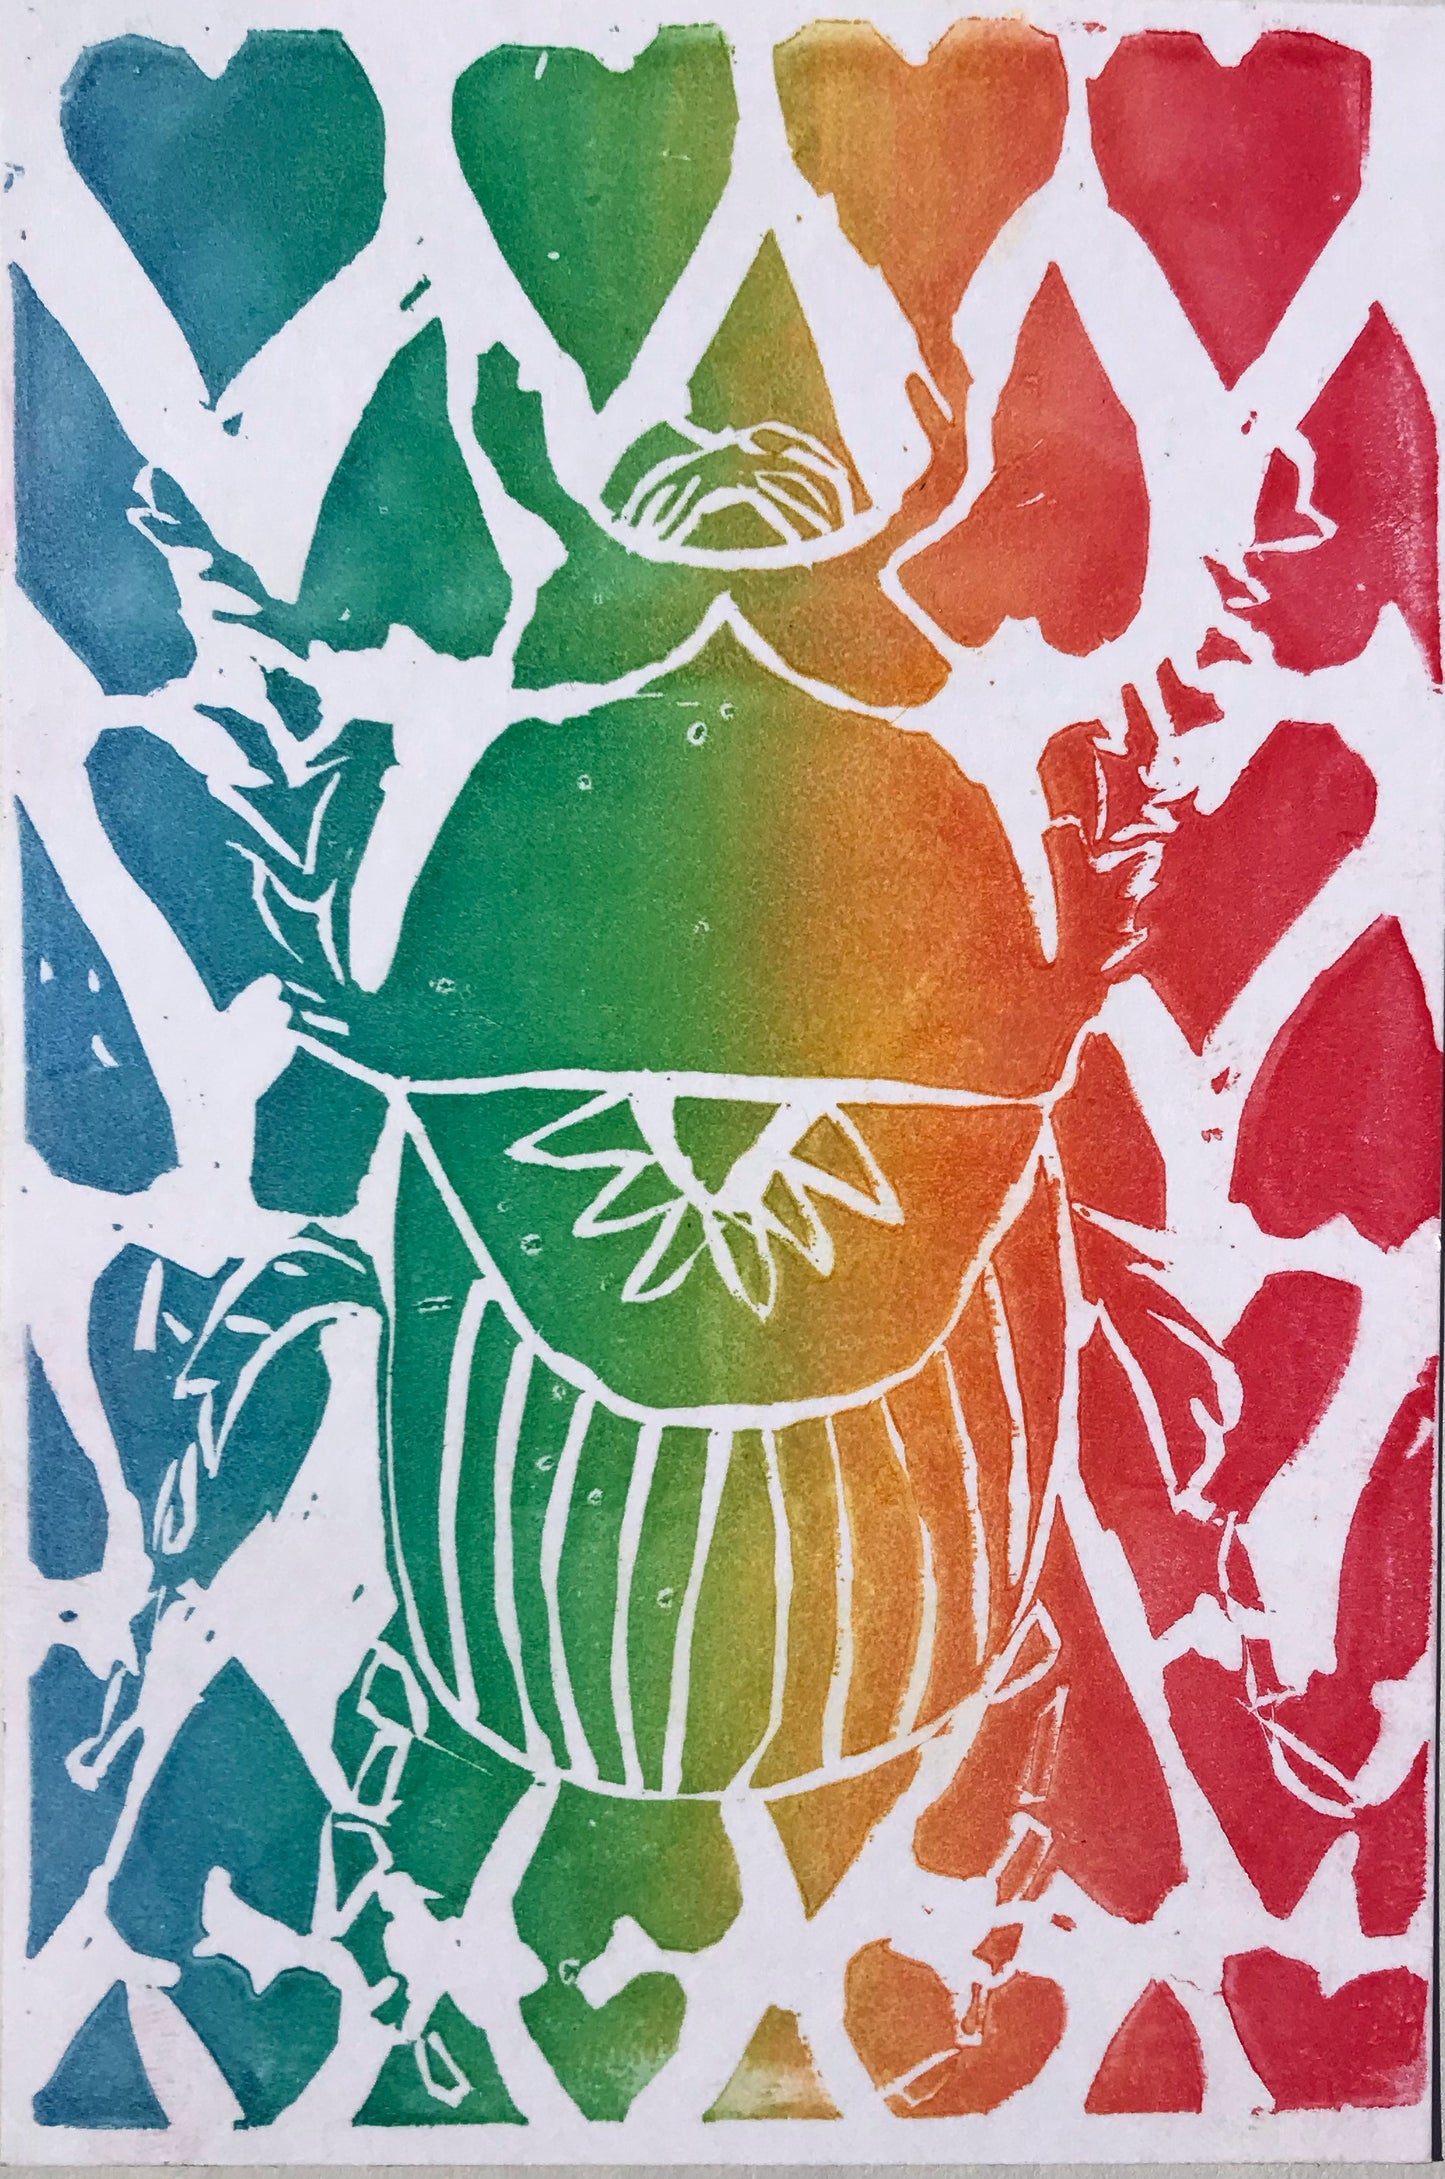 Love Bug Postcard